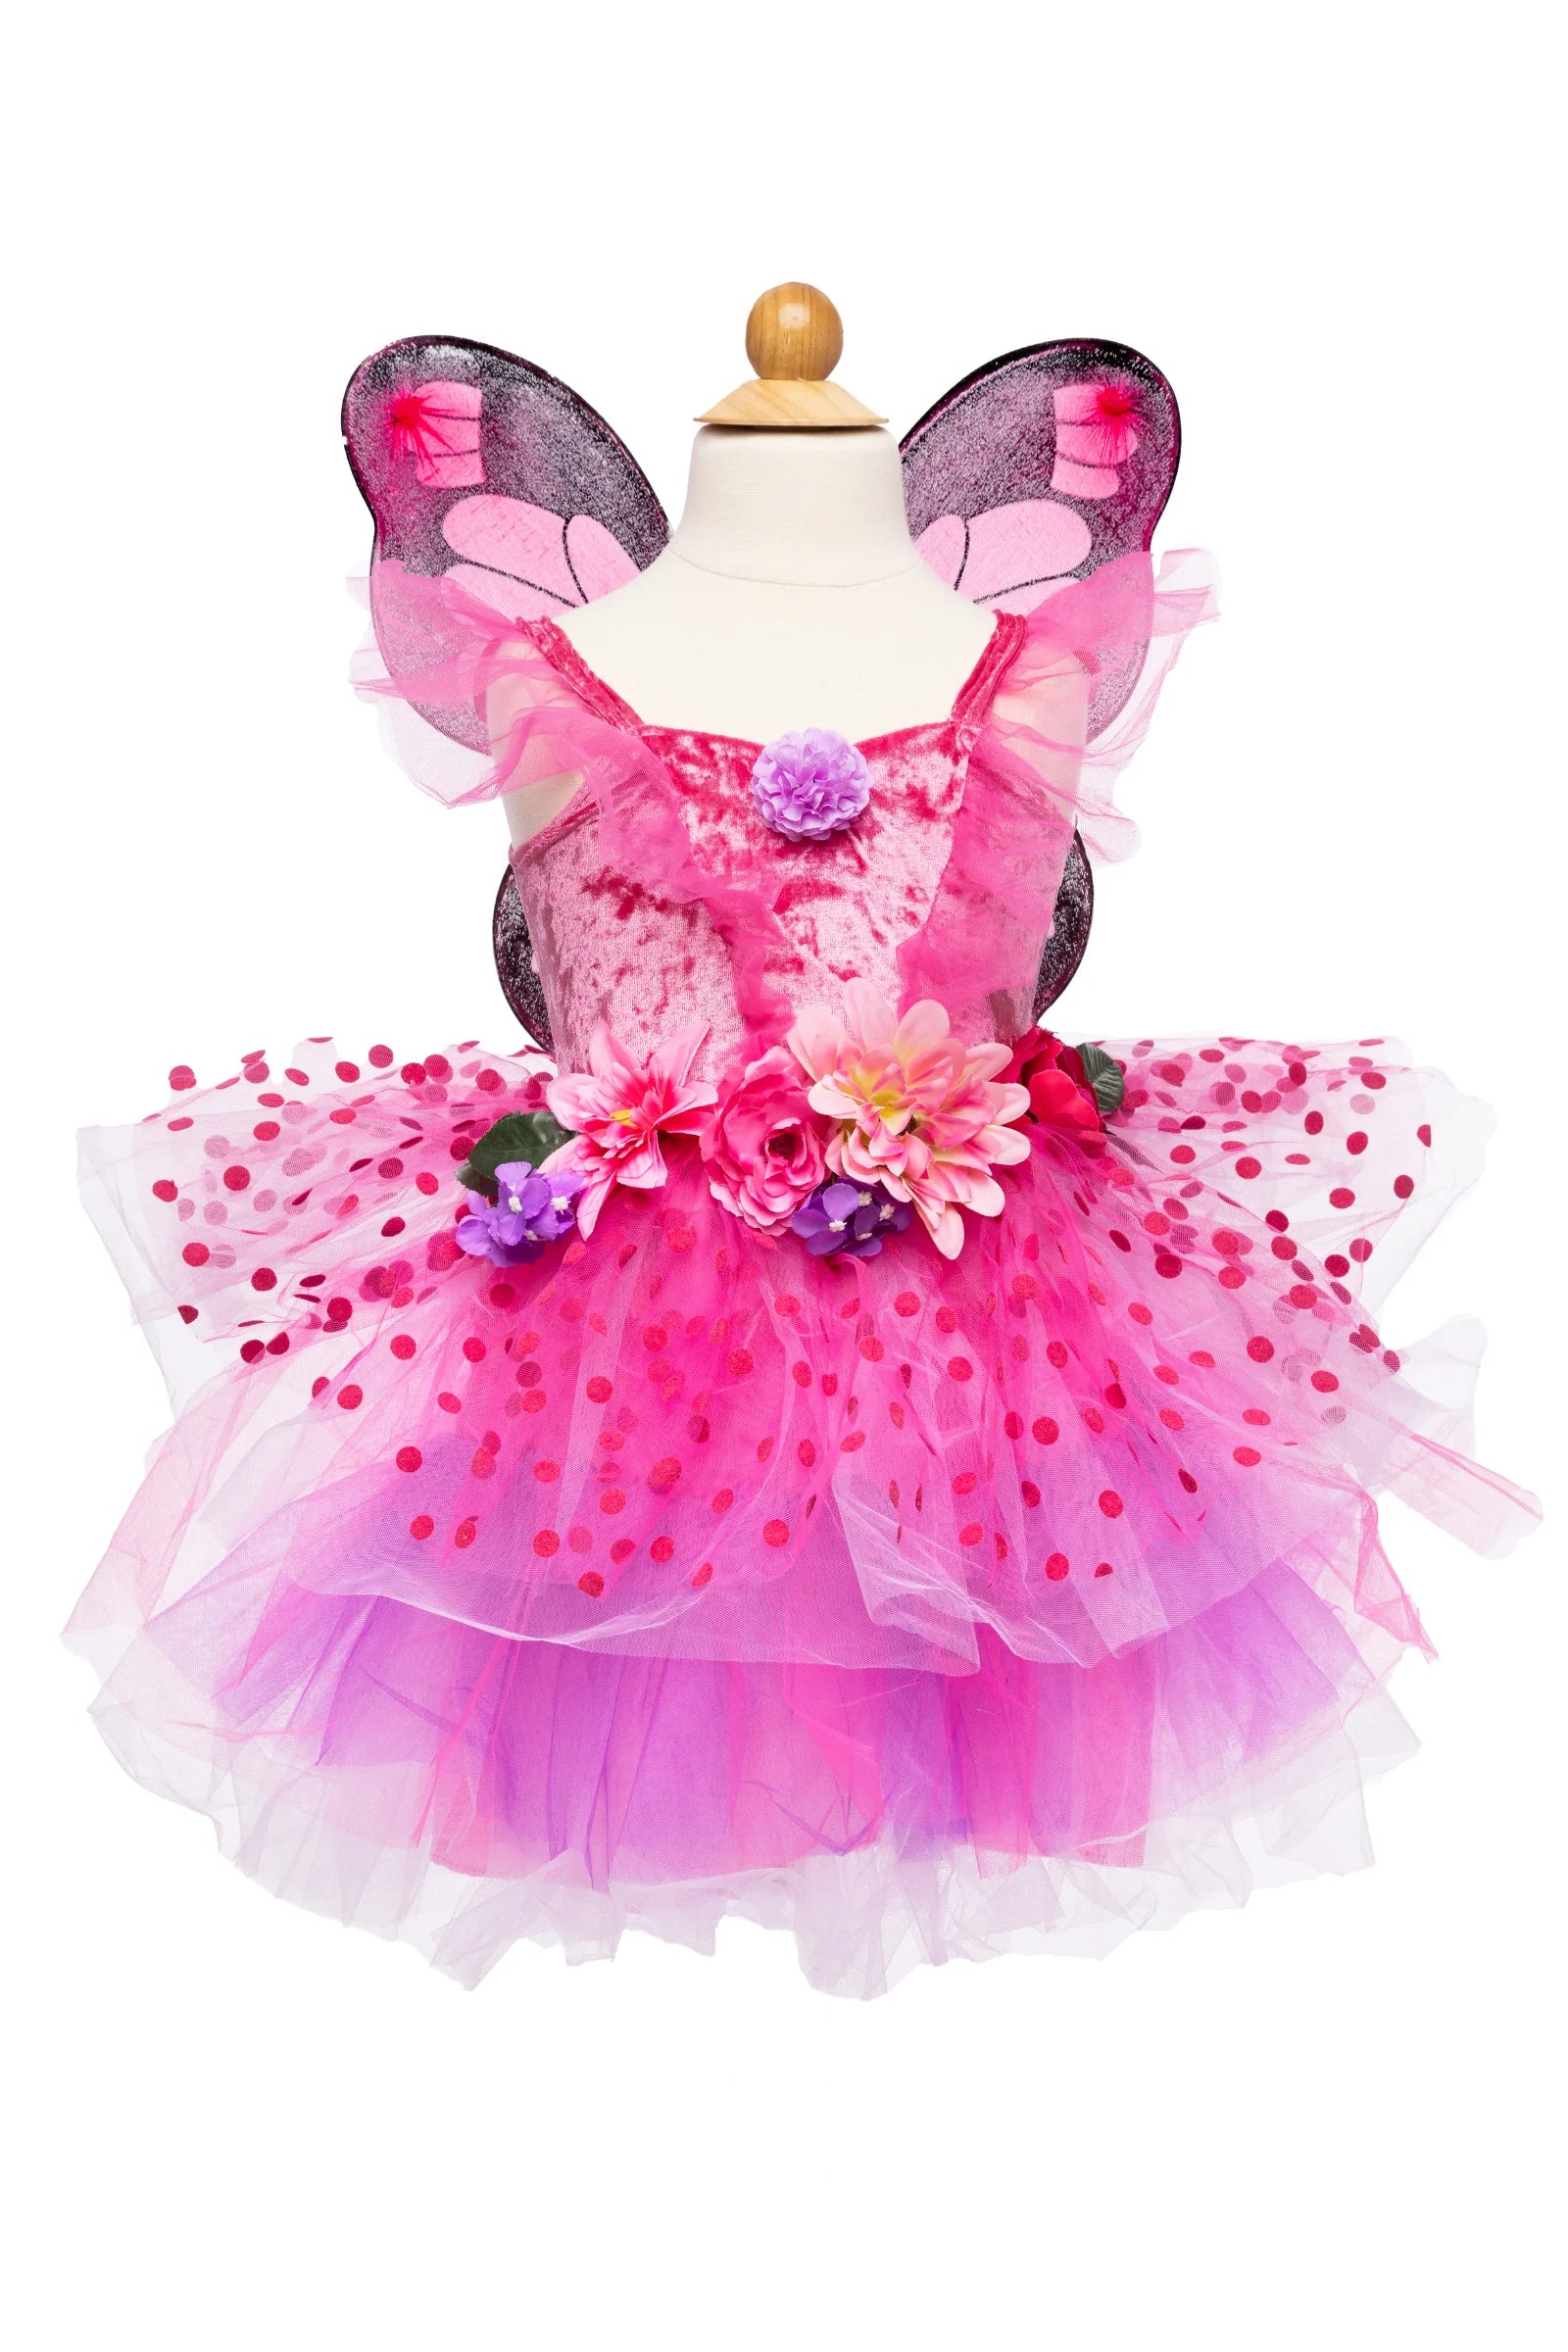 fairy blooms | medium deluxe dress + wings